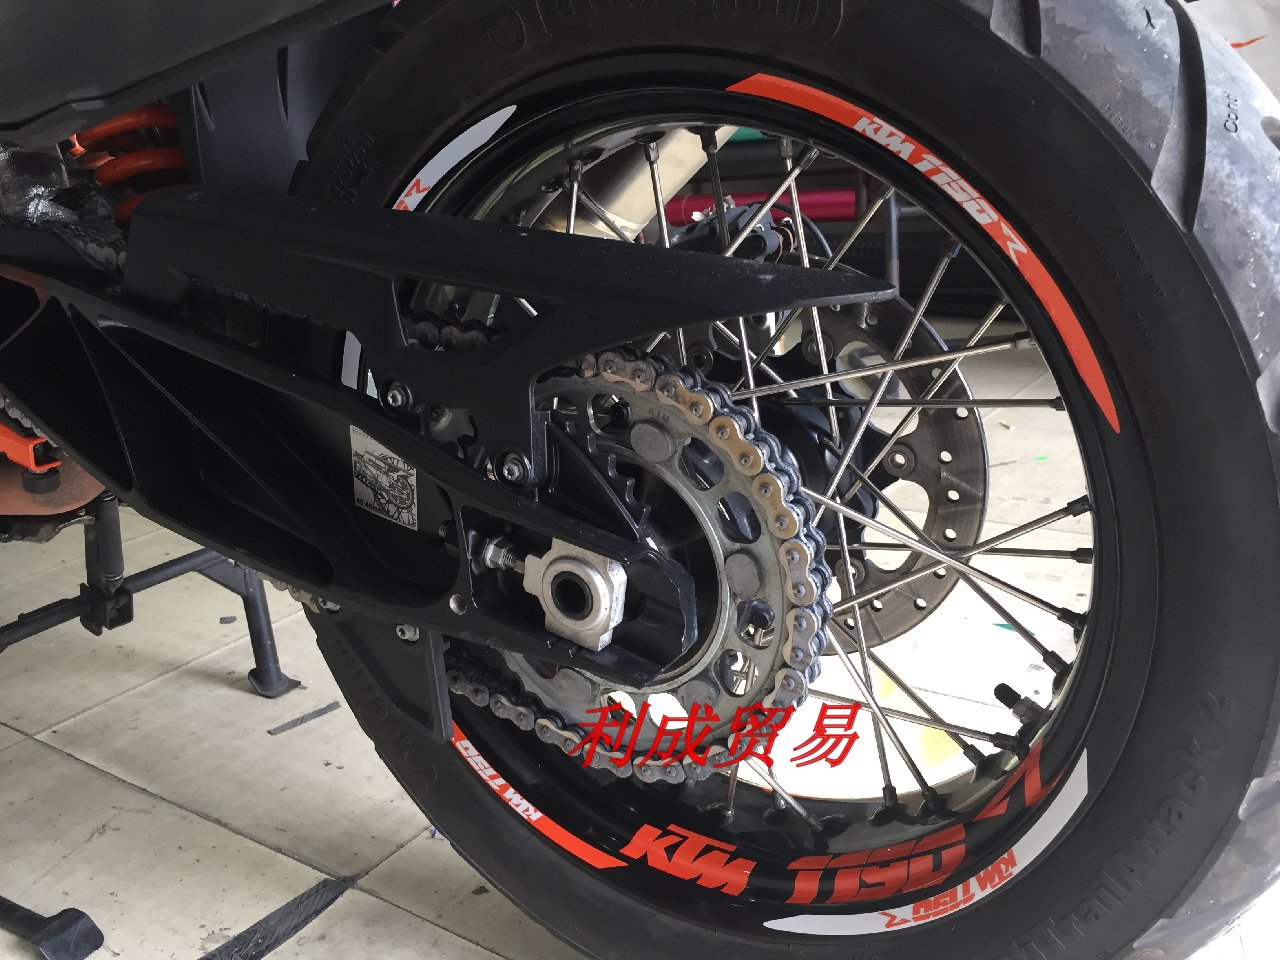 KTM钢圈贴/创意款个性轮毂贴/KTM 1190 R摩托车轮圈贴花/防水反光